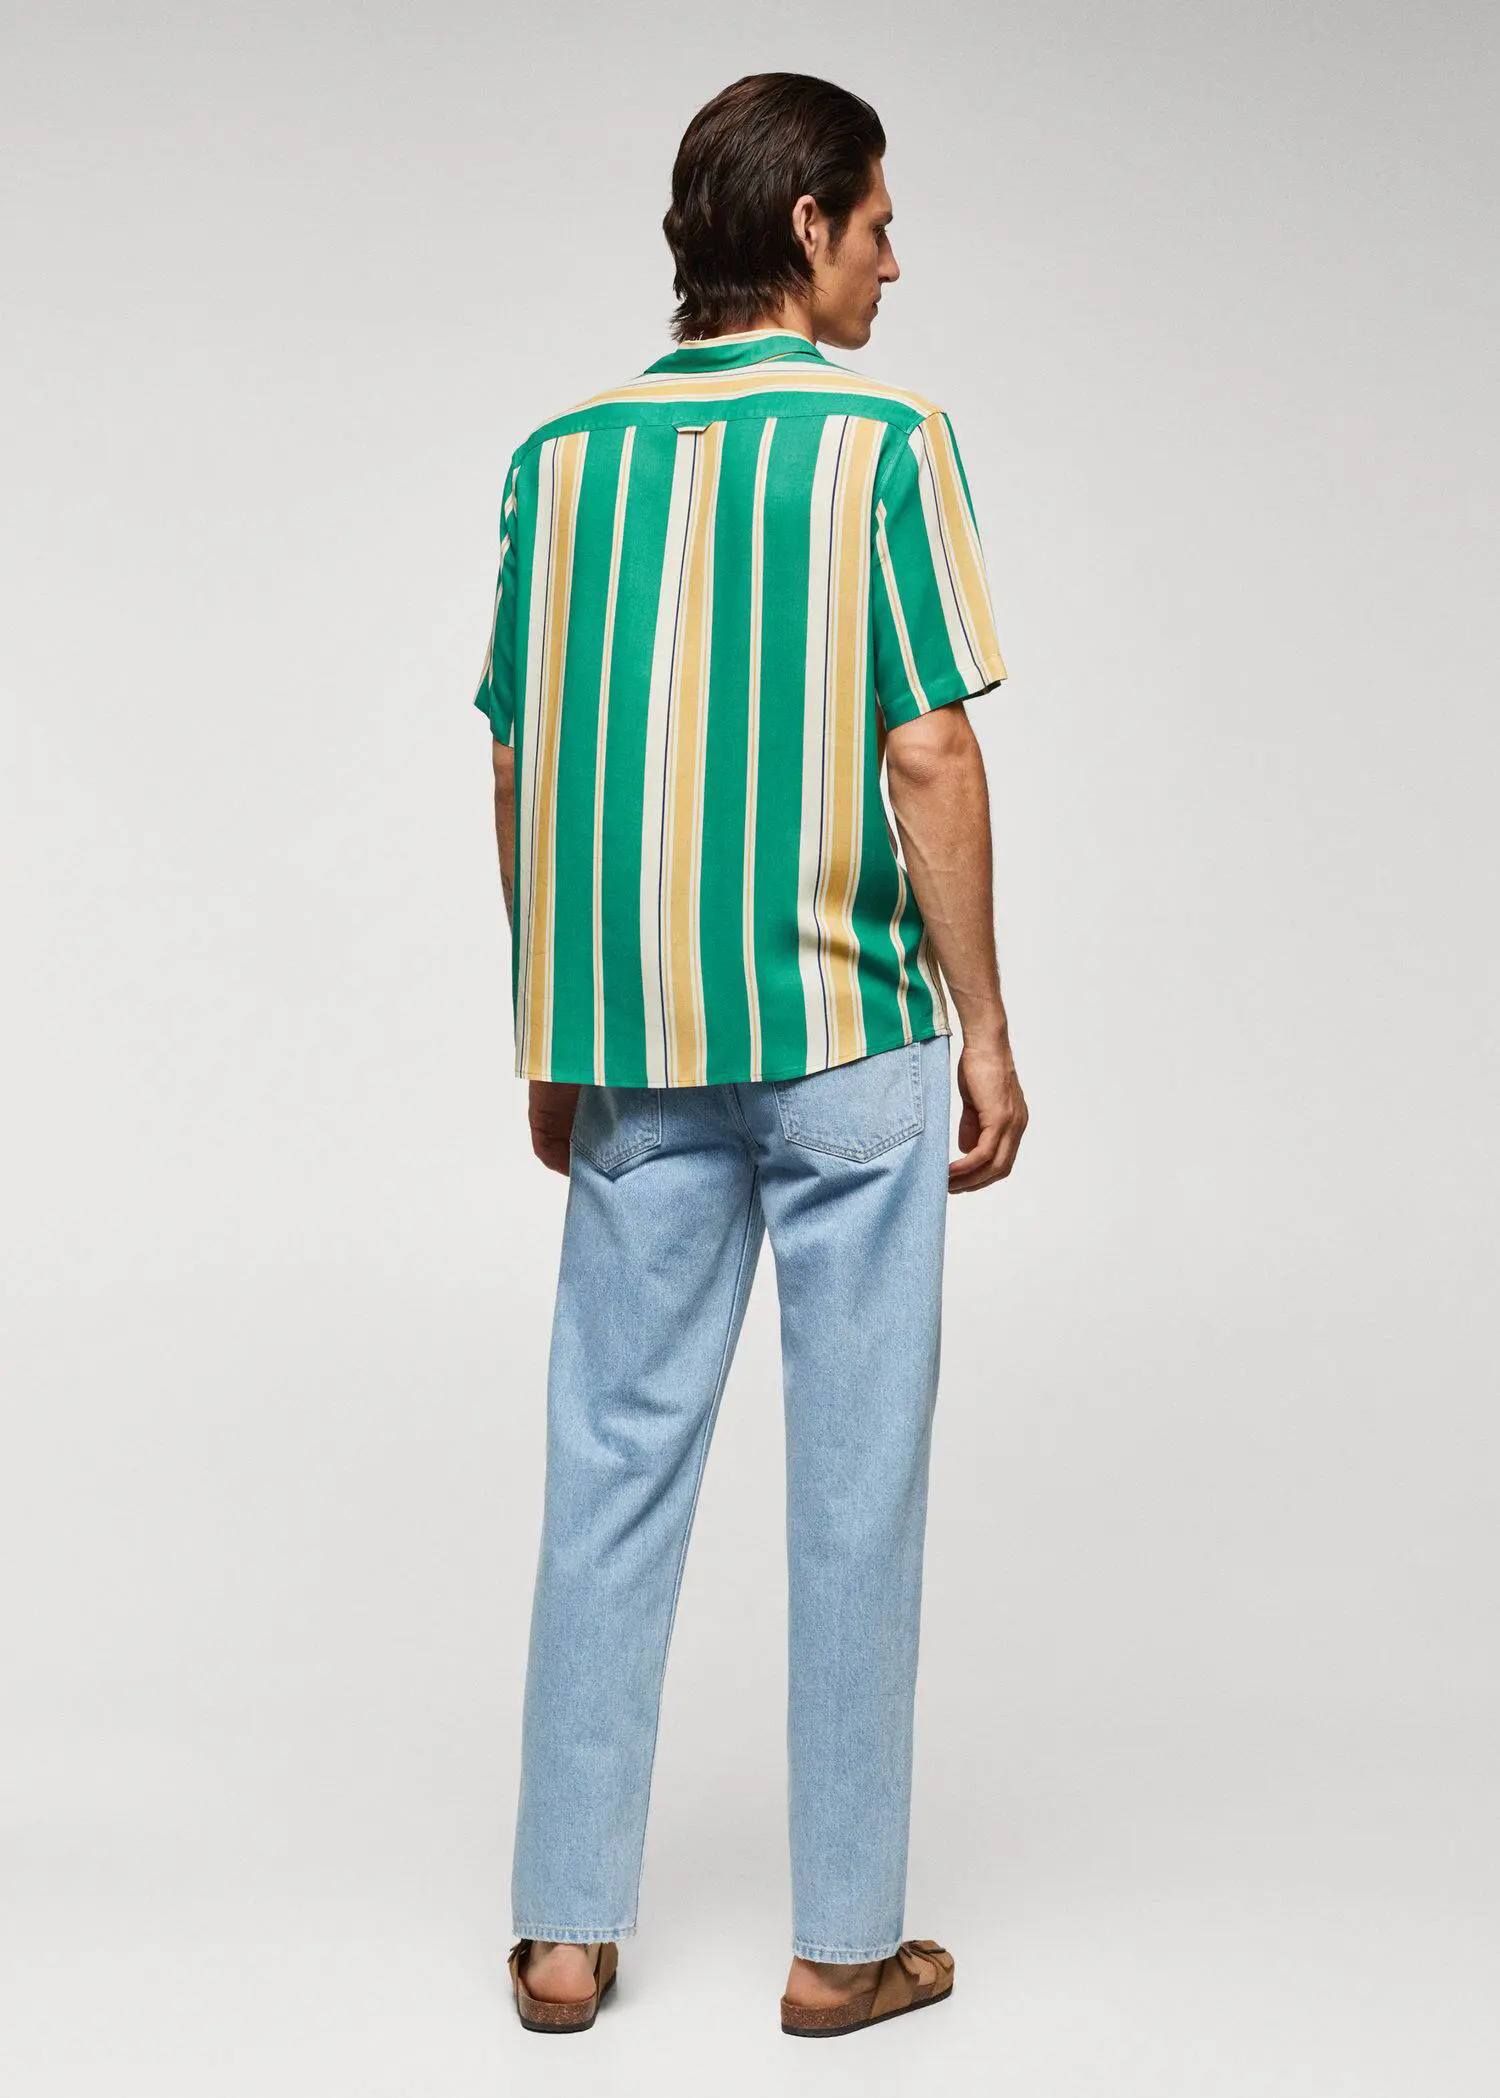 Mango Short sleeve striped shirt. 3